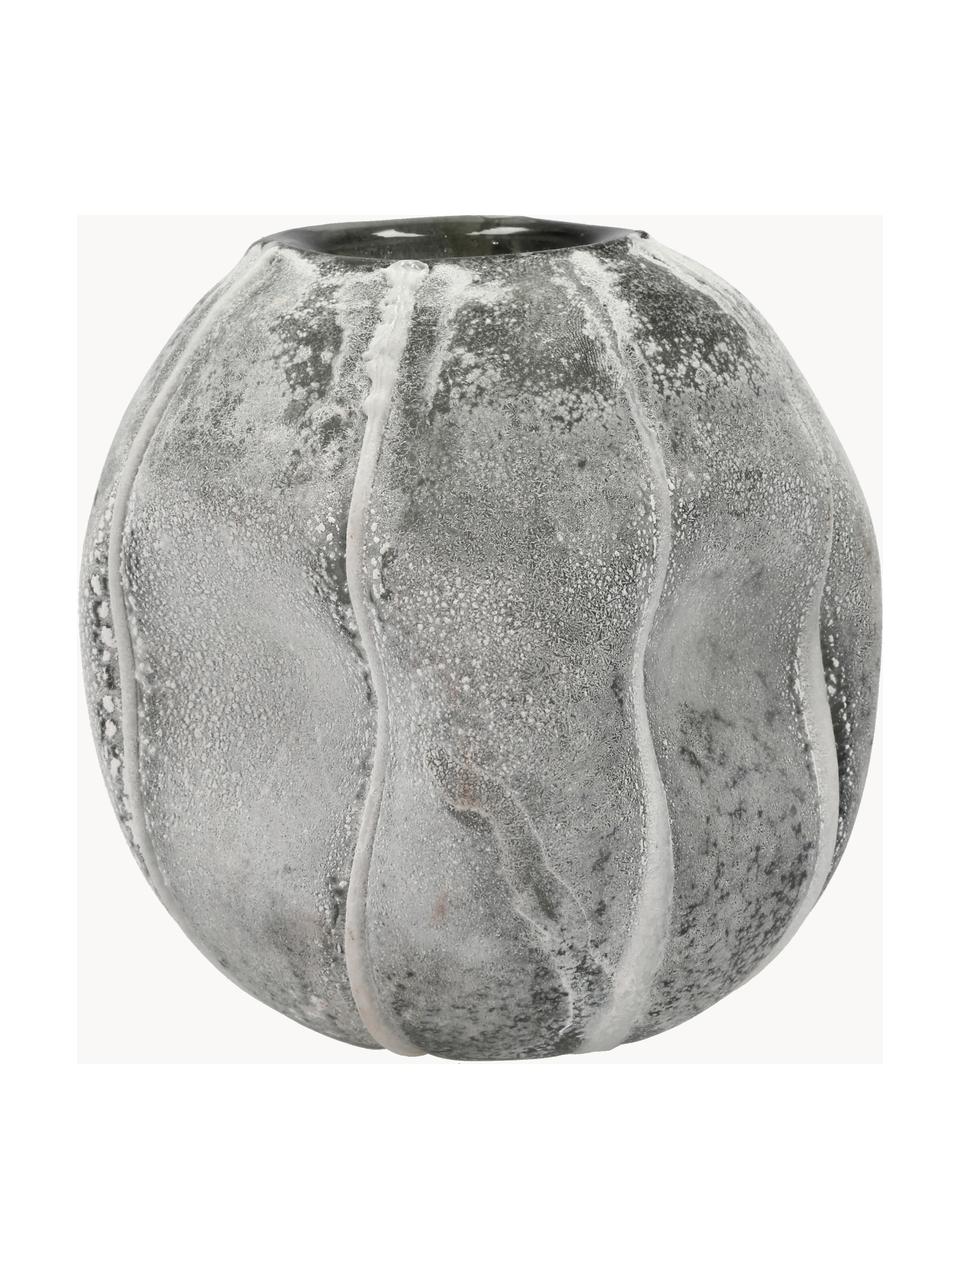 Glas-Vase Sigt in organischer Form, H 13 cm | Westwing